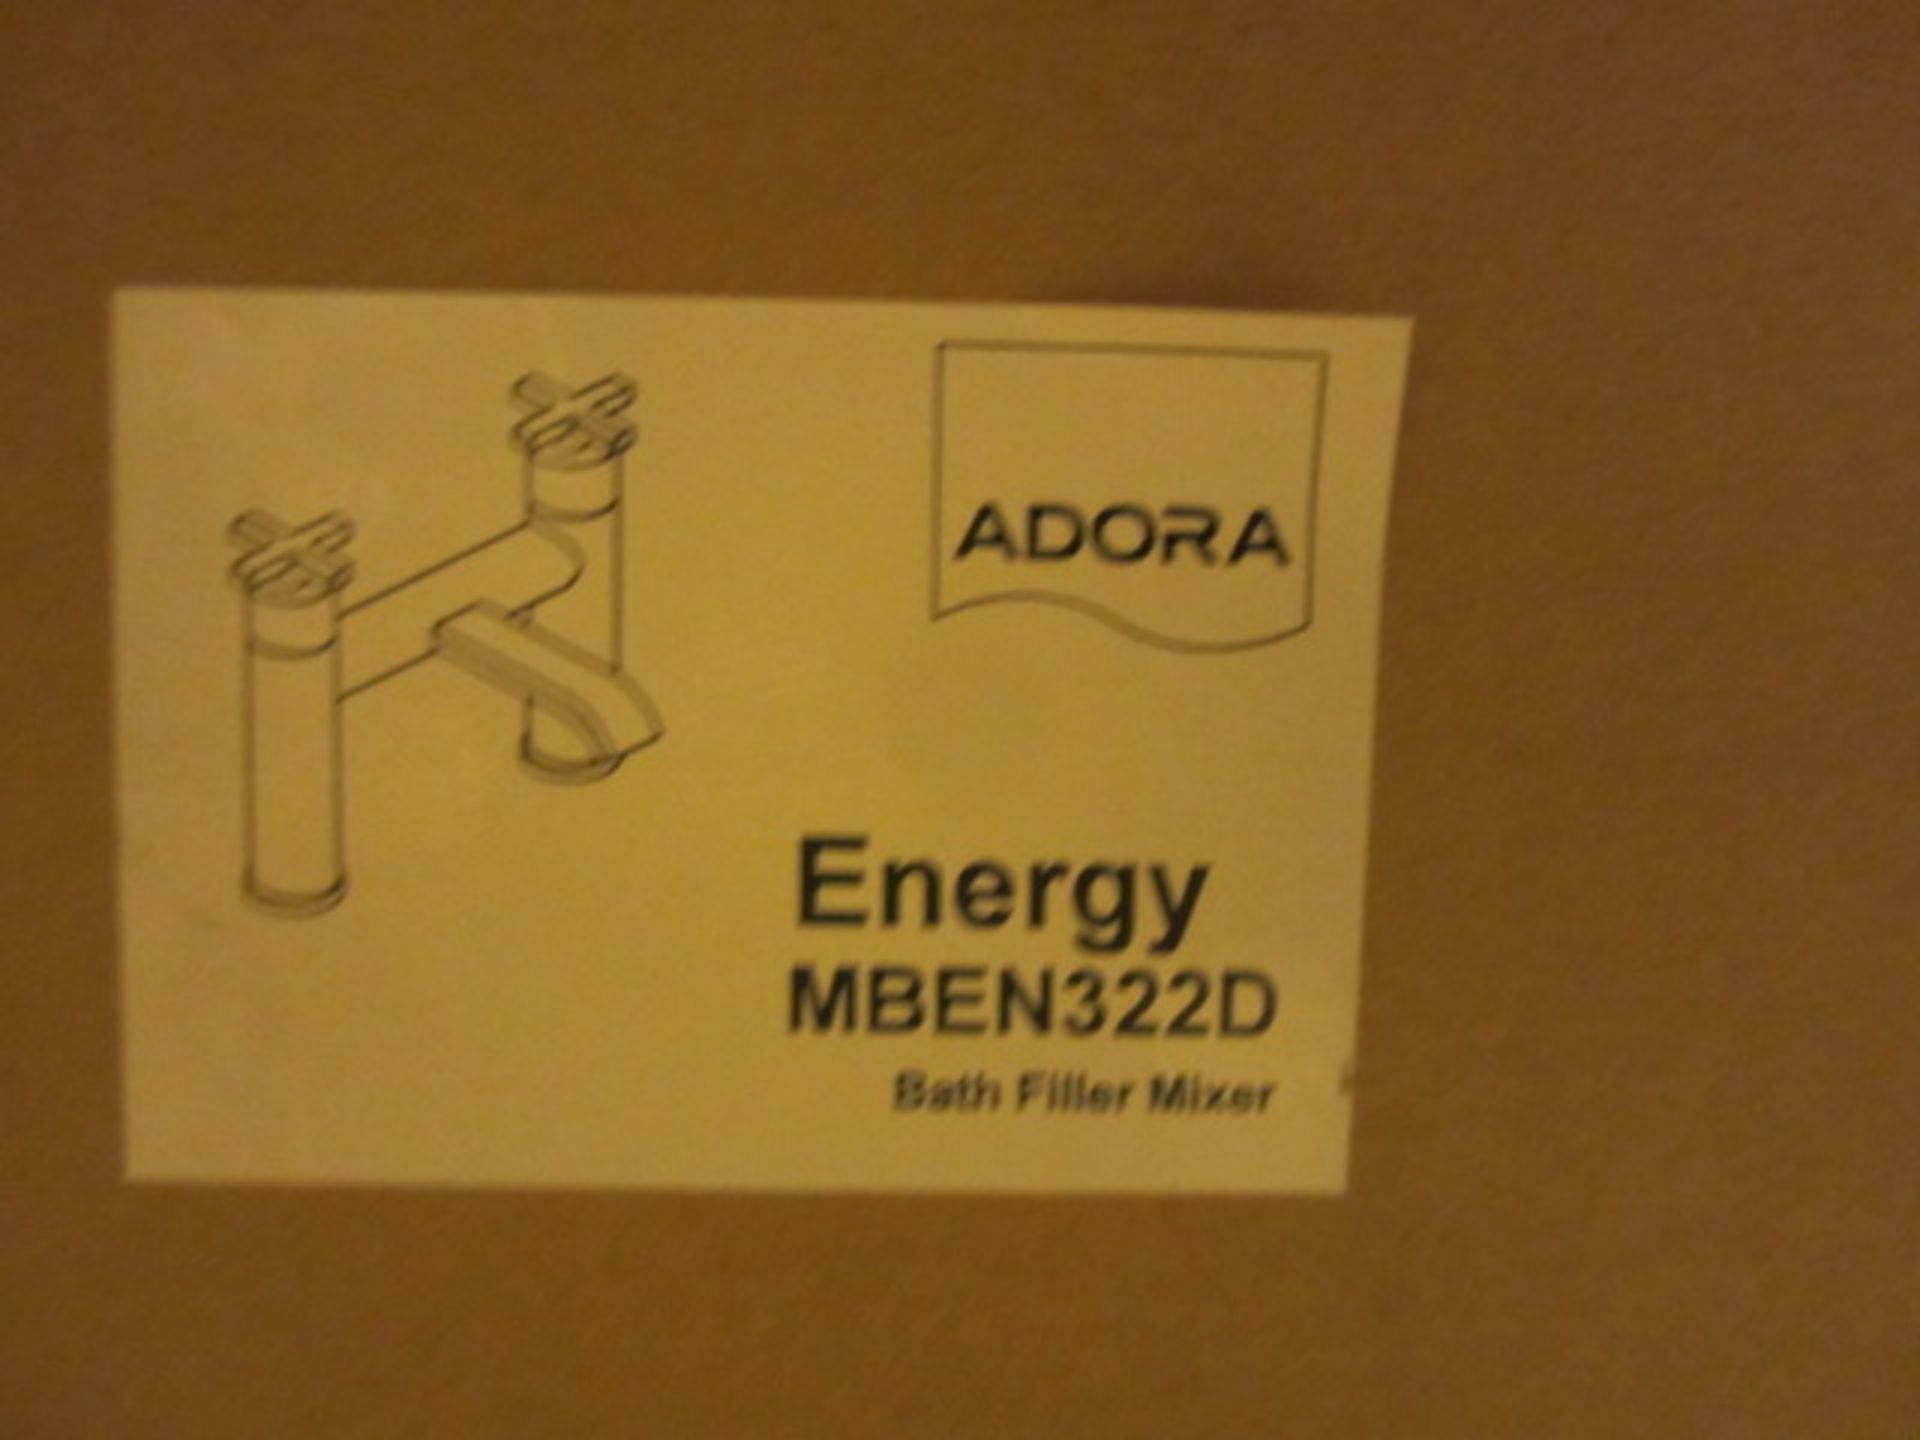 Two Adora bath filler mixers - Image 2 of 2